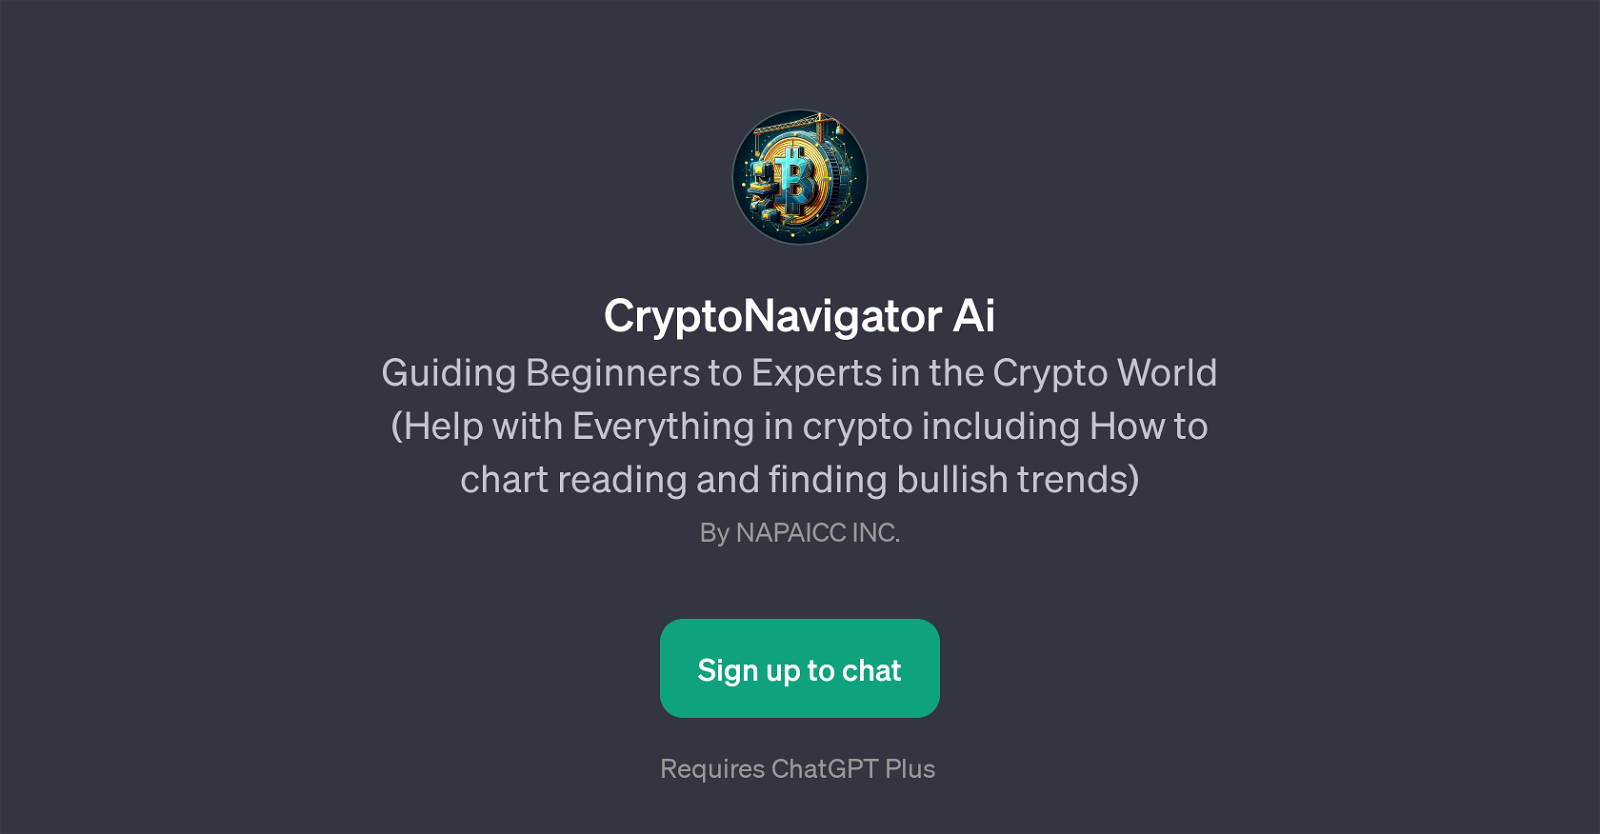 CryptoNavigator Ai website